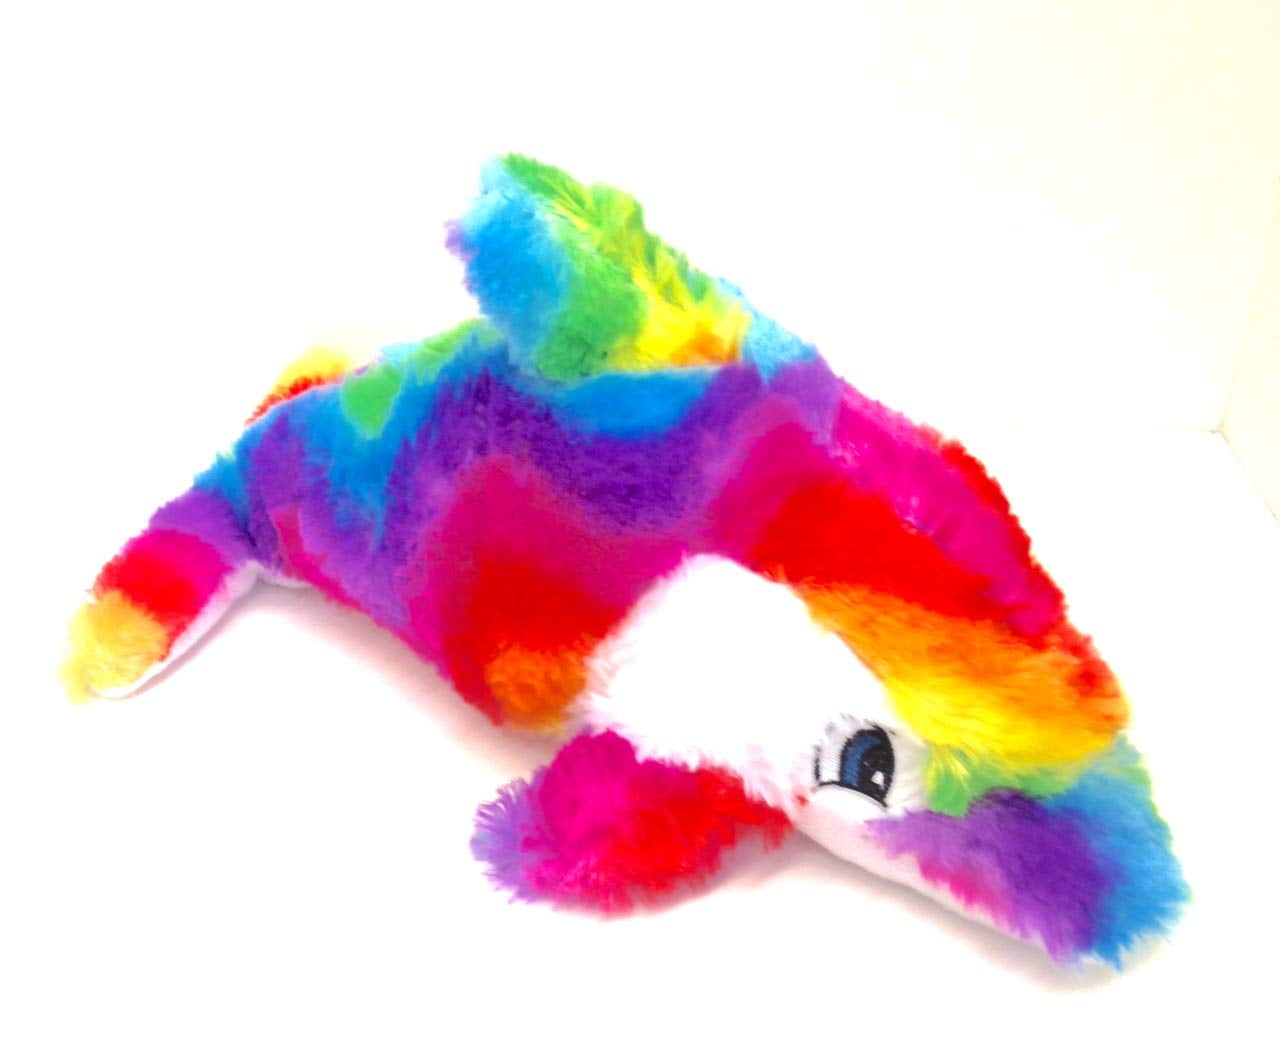 rainbow stuffed toy